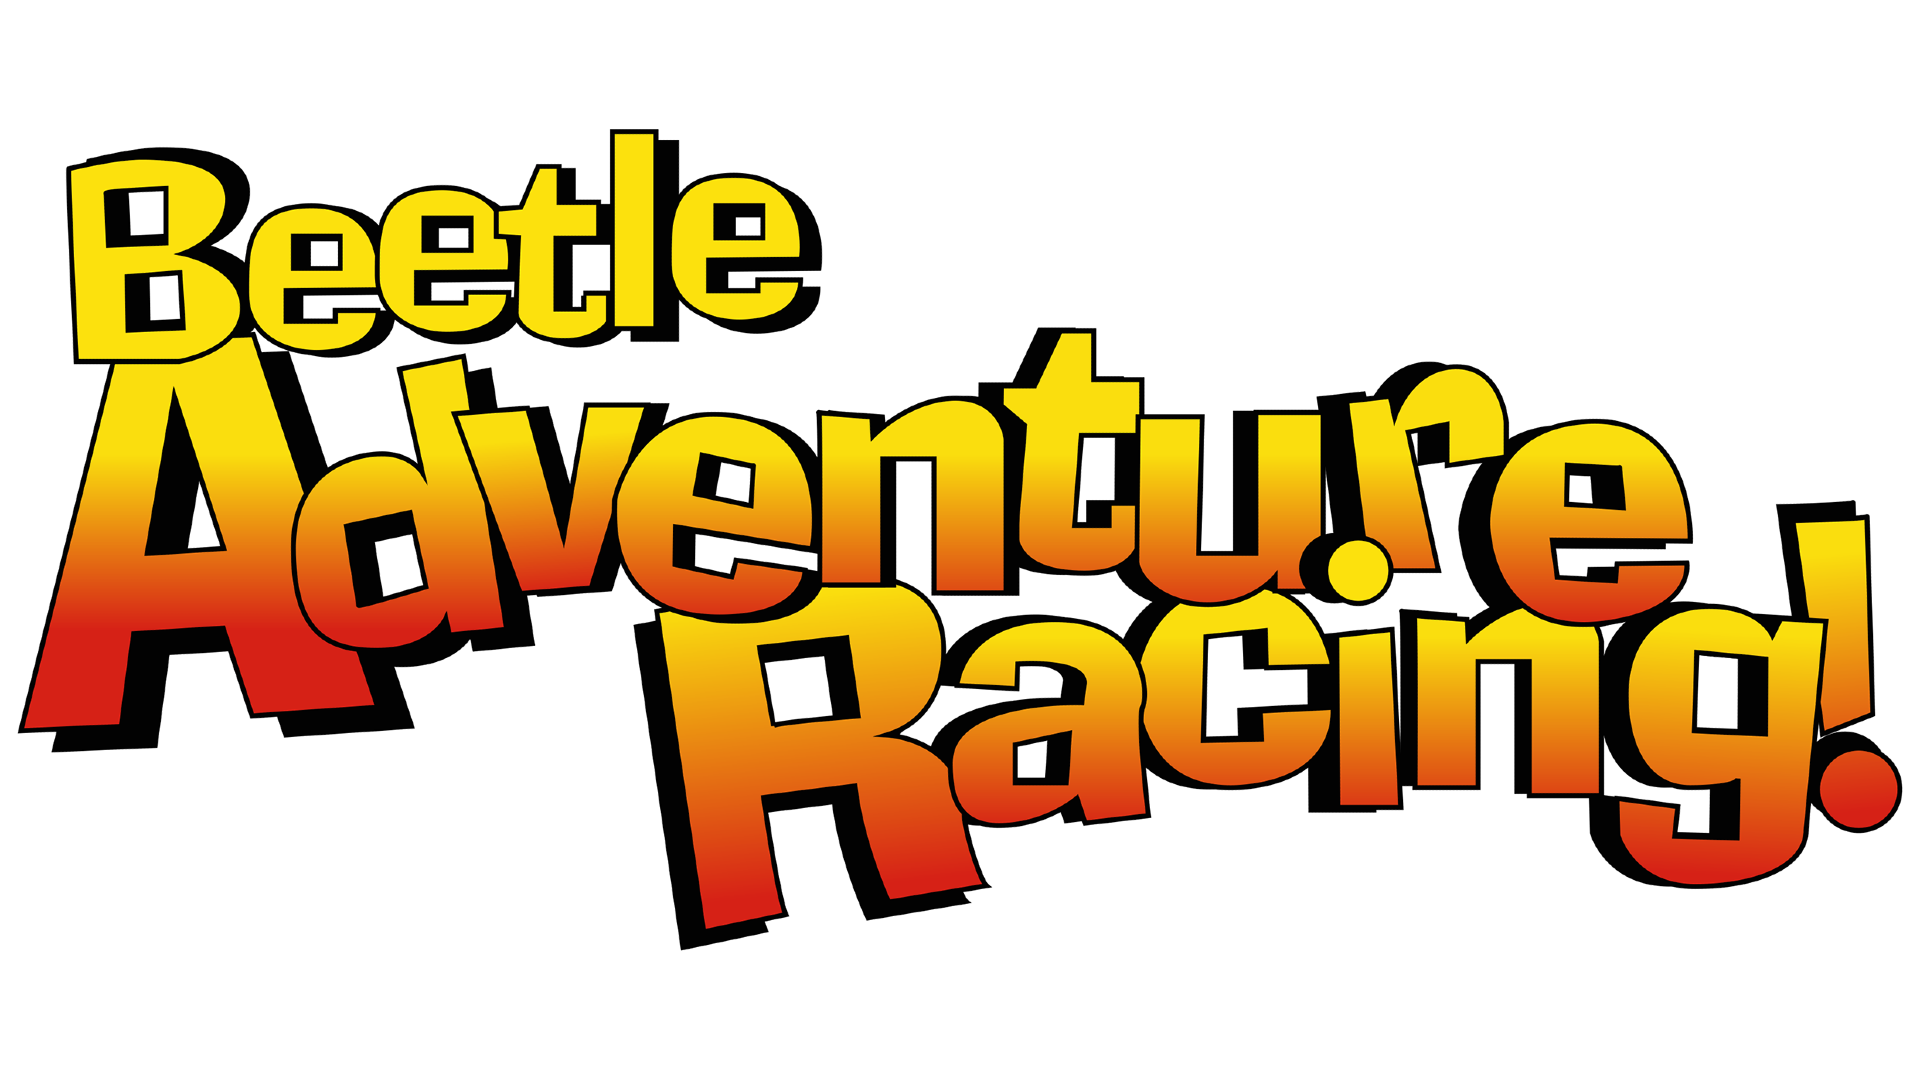 Beetle Adventure Racing! Logo